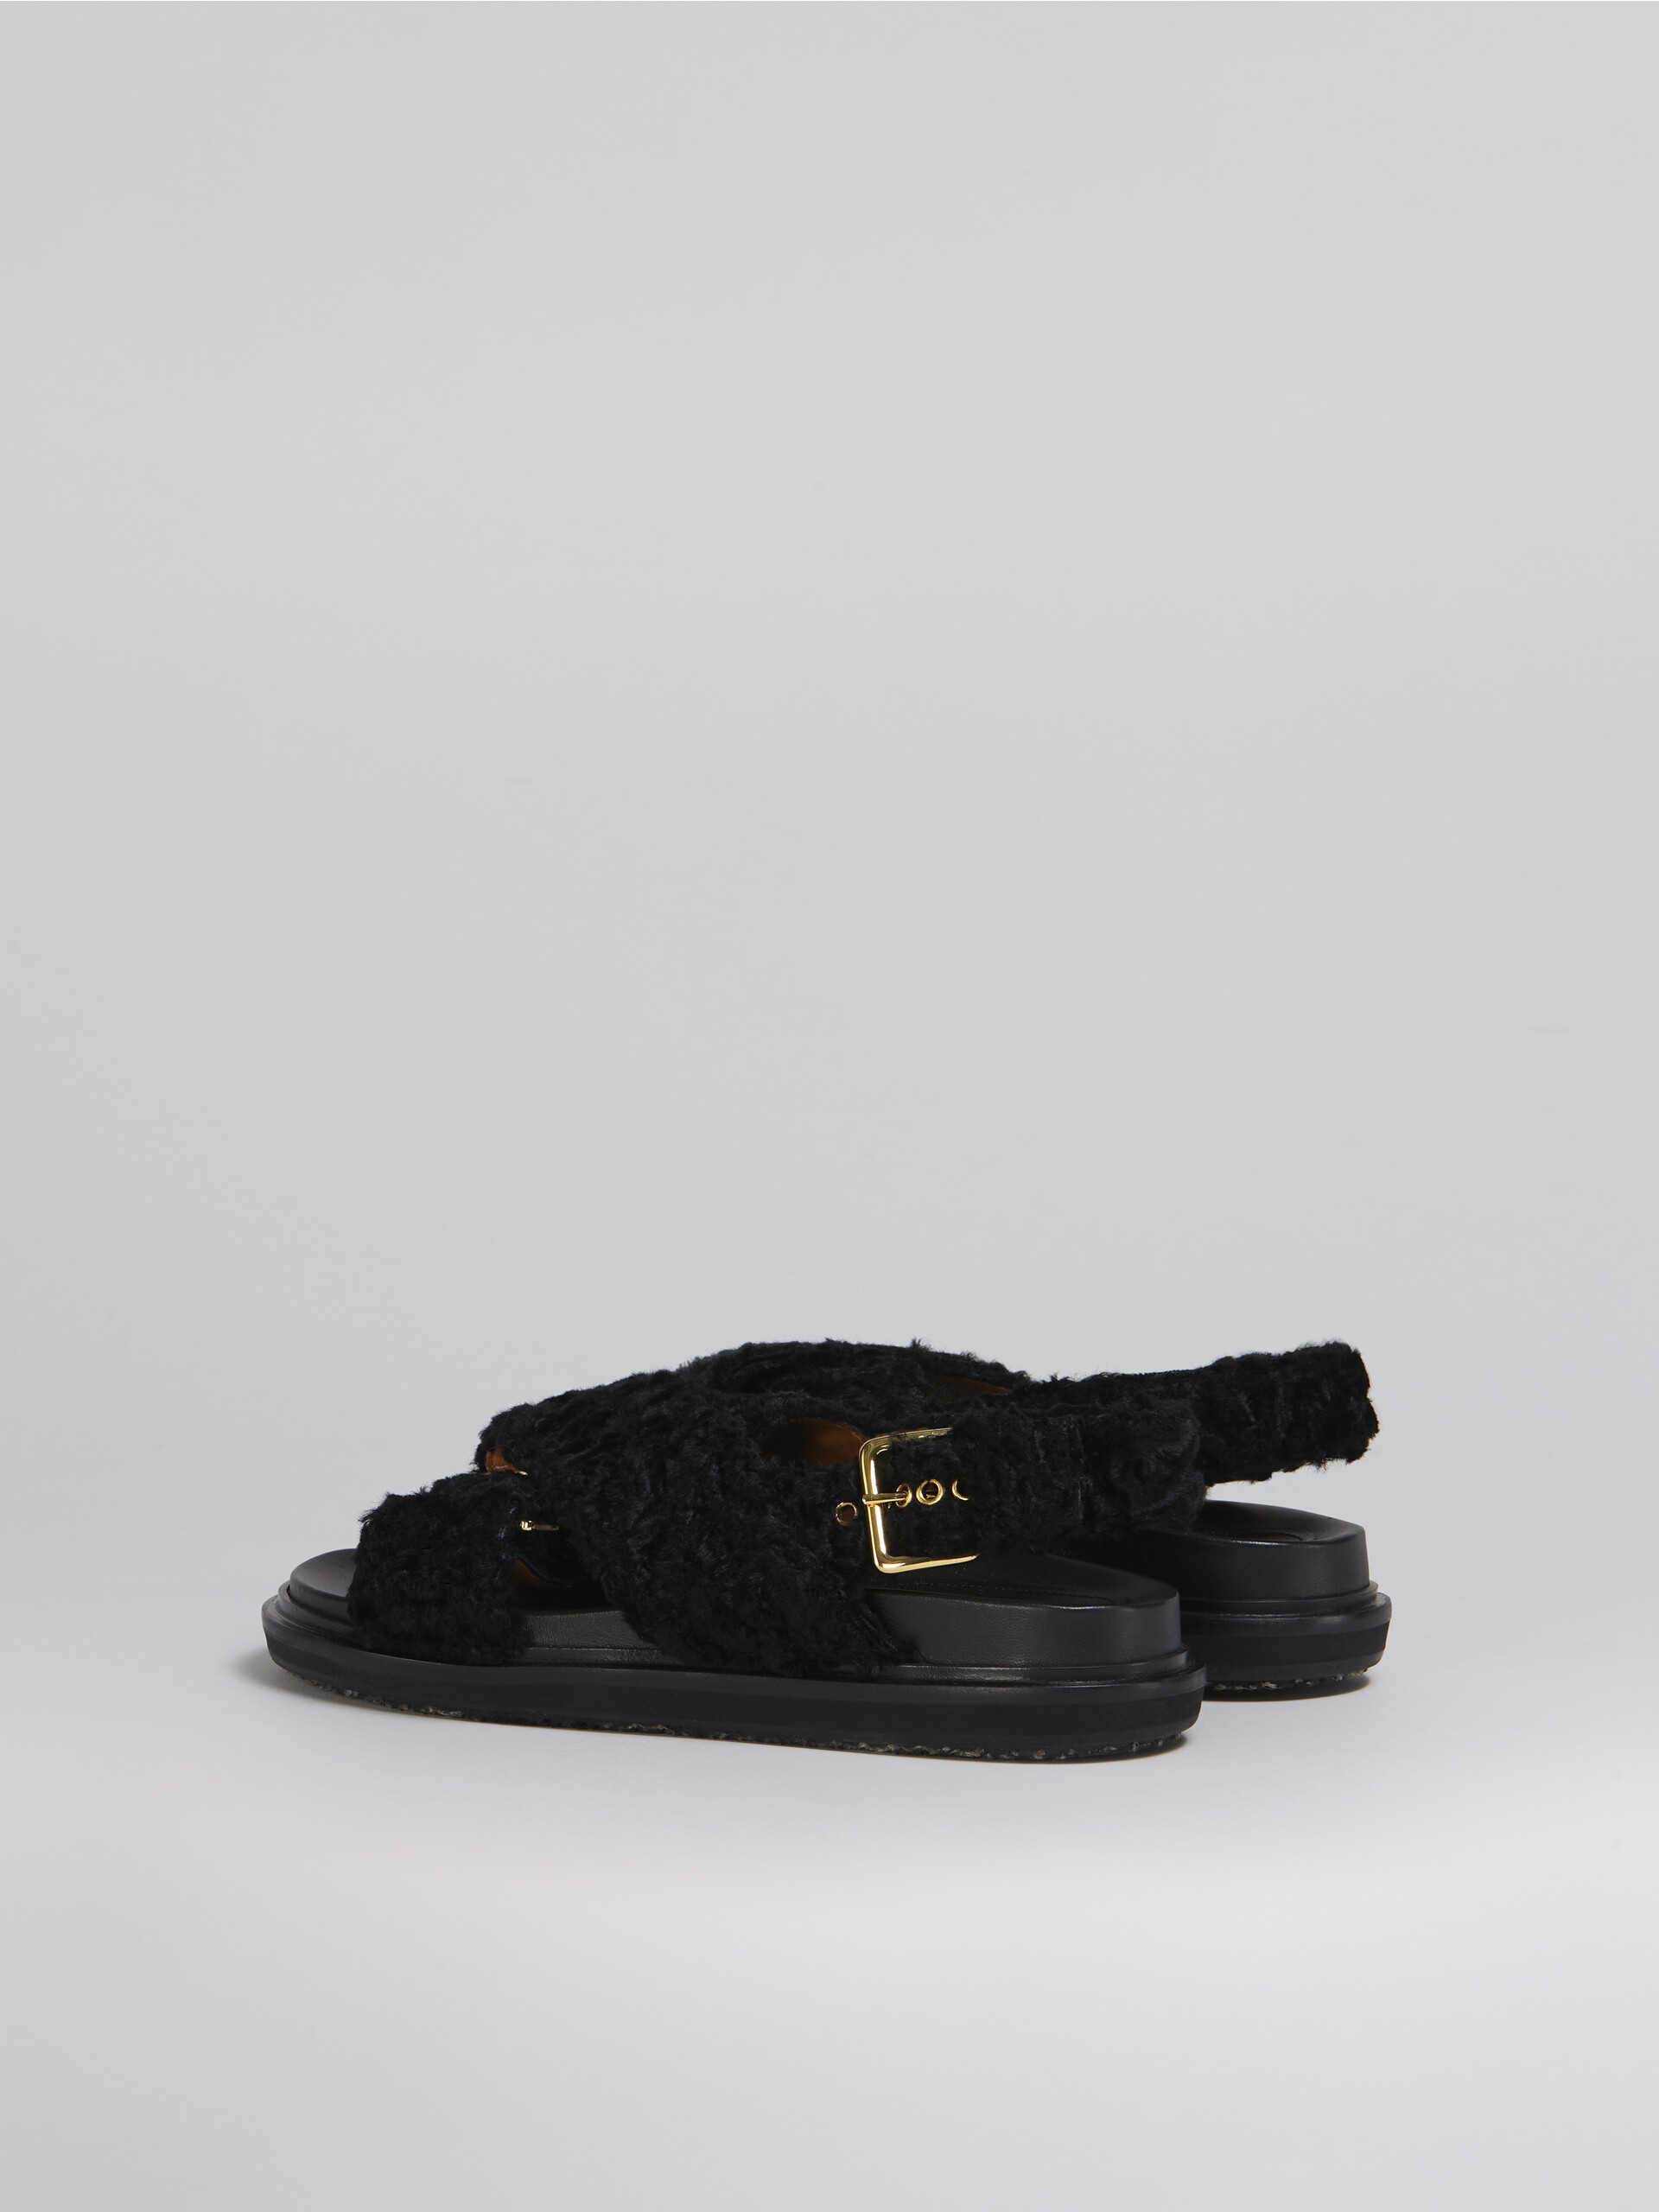 Black Fussbett in curly fabric - Sandals - Image 3